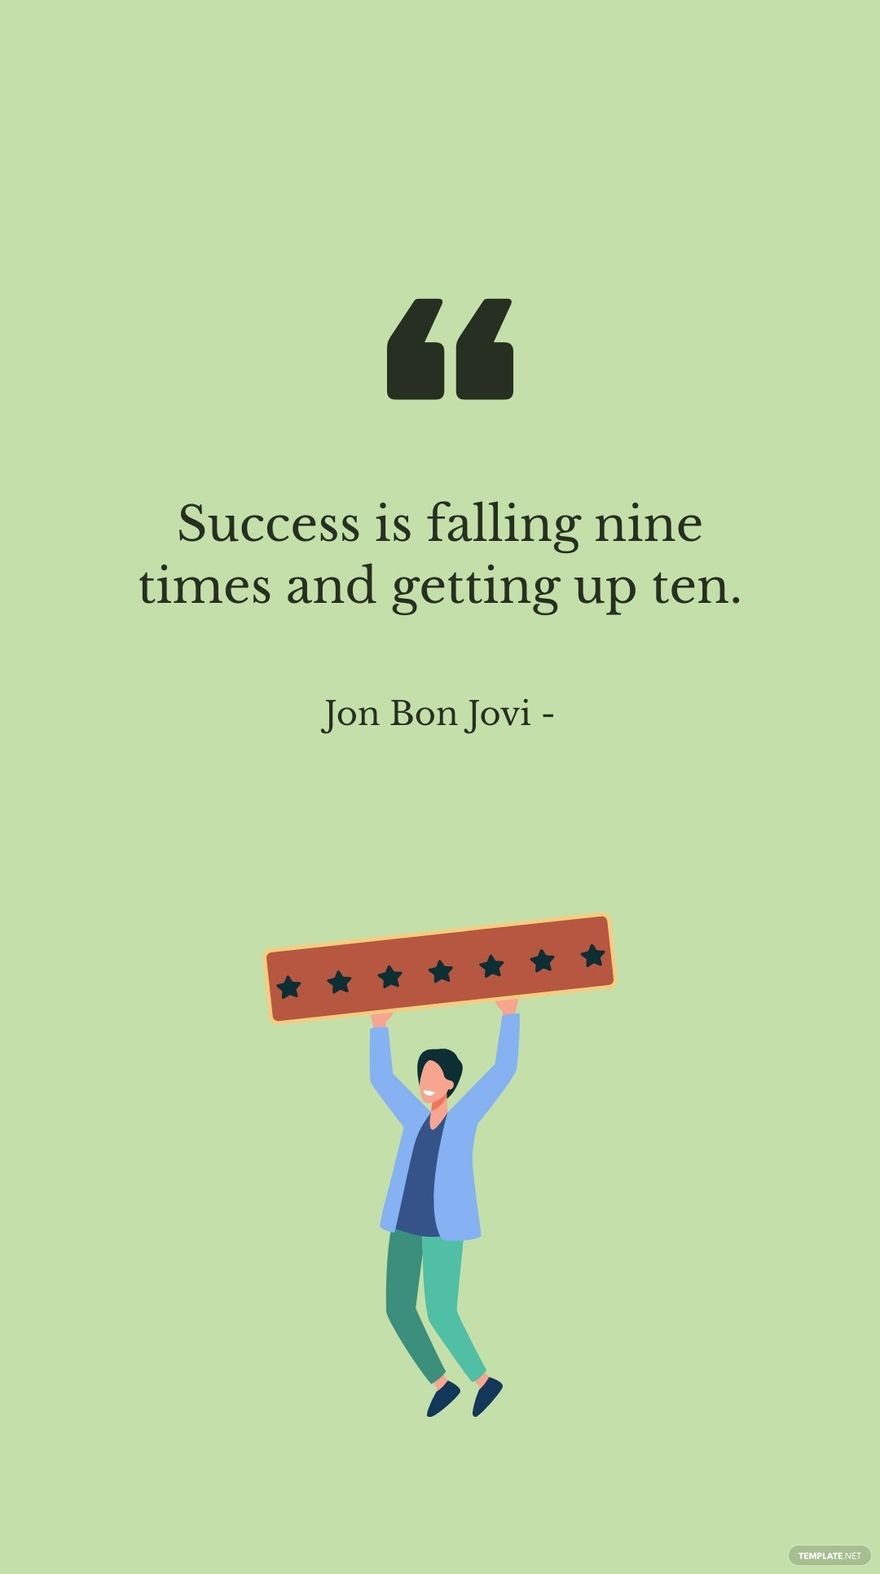 Jon Bon Jovi - Success is falling nine times and getting up ten.